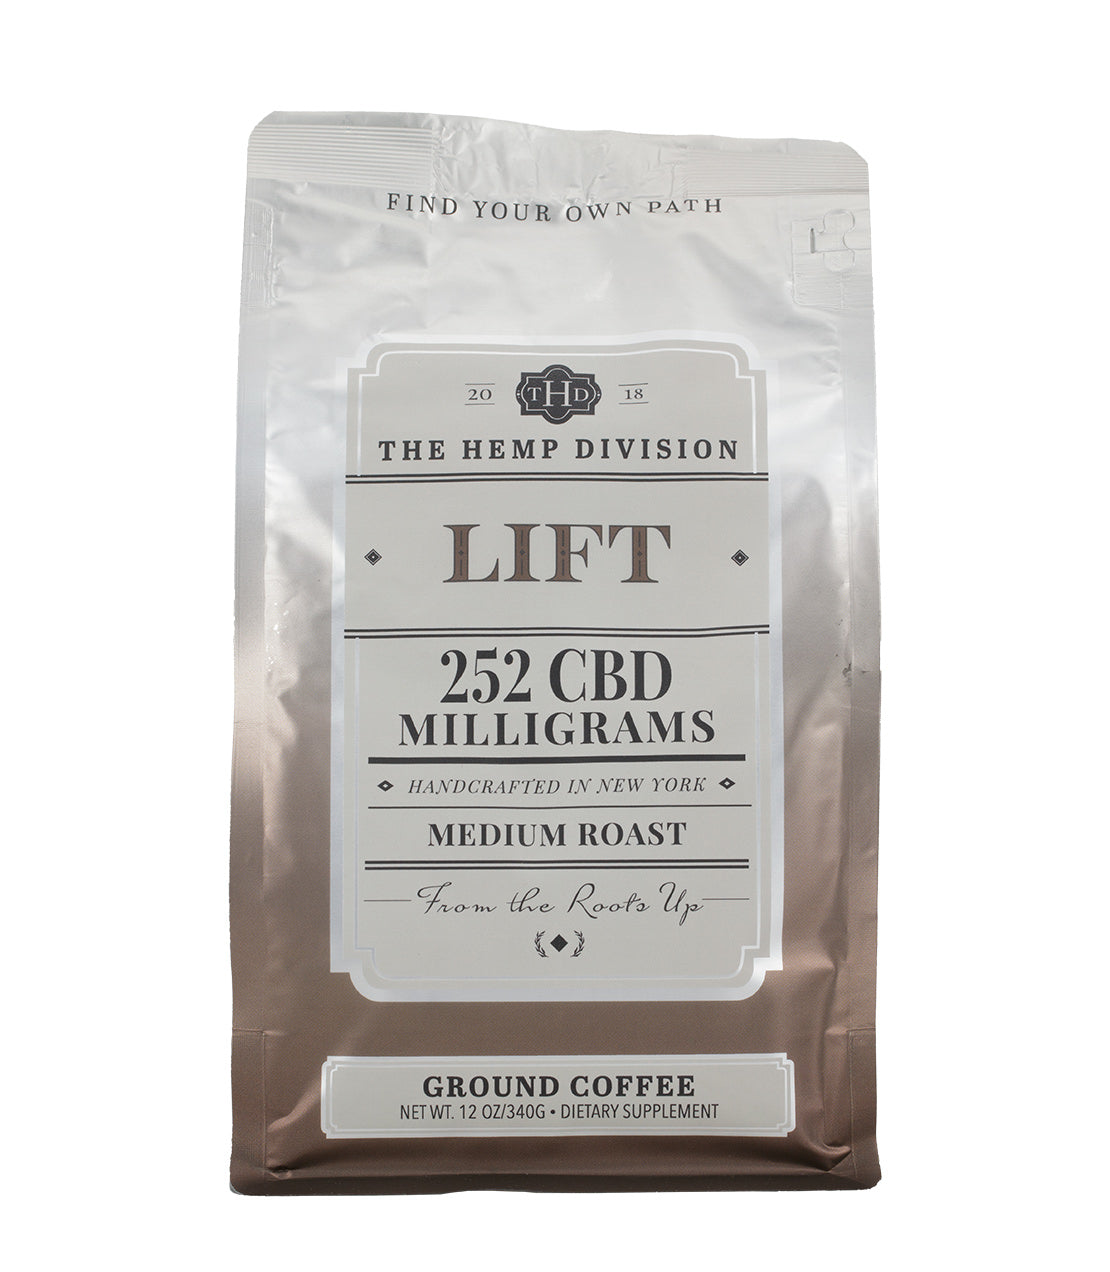 THD Lift Ground Coffee